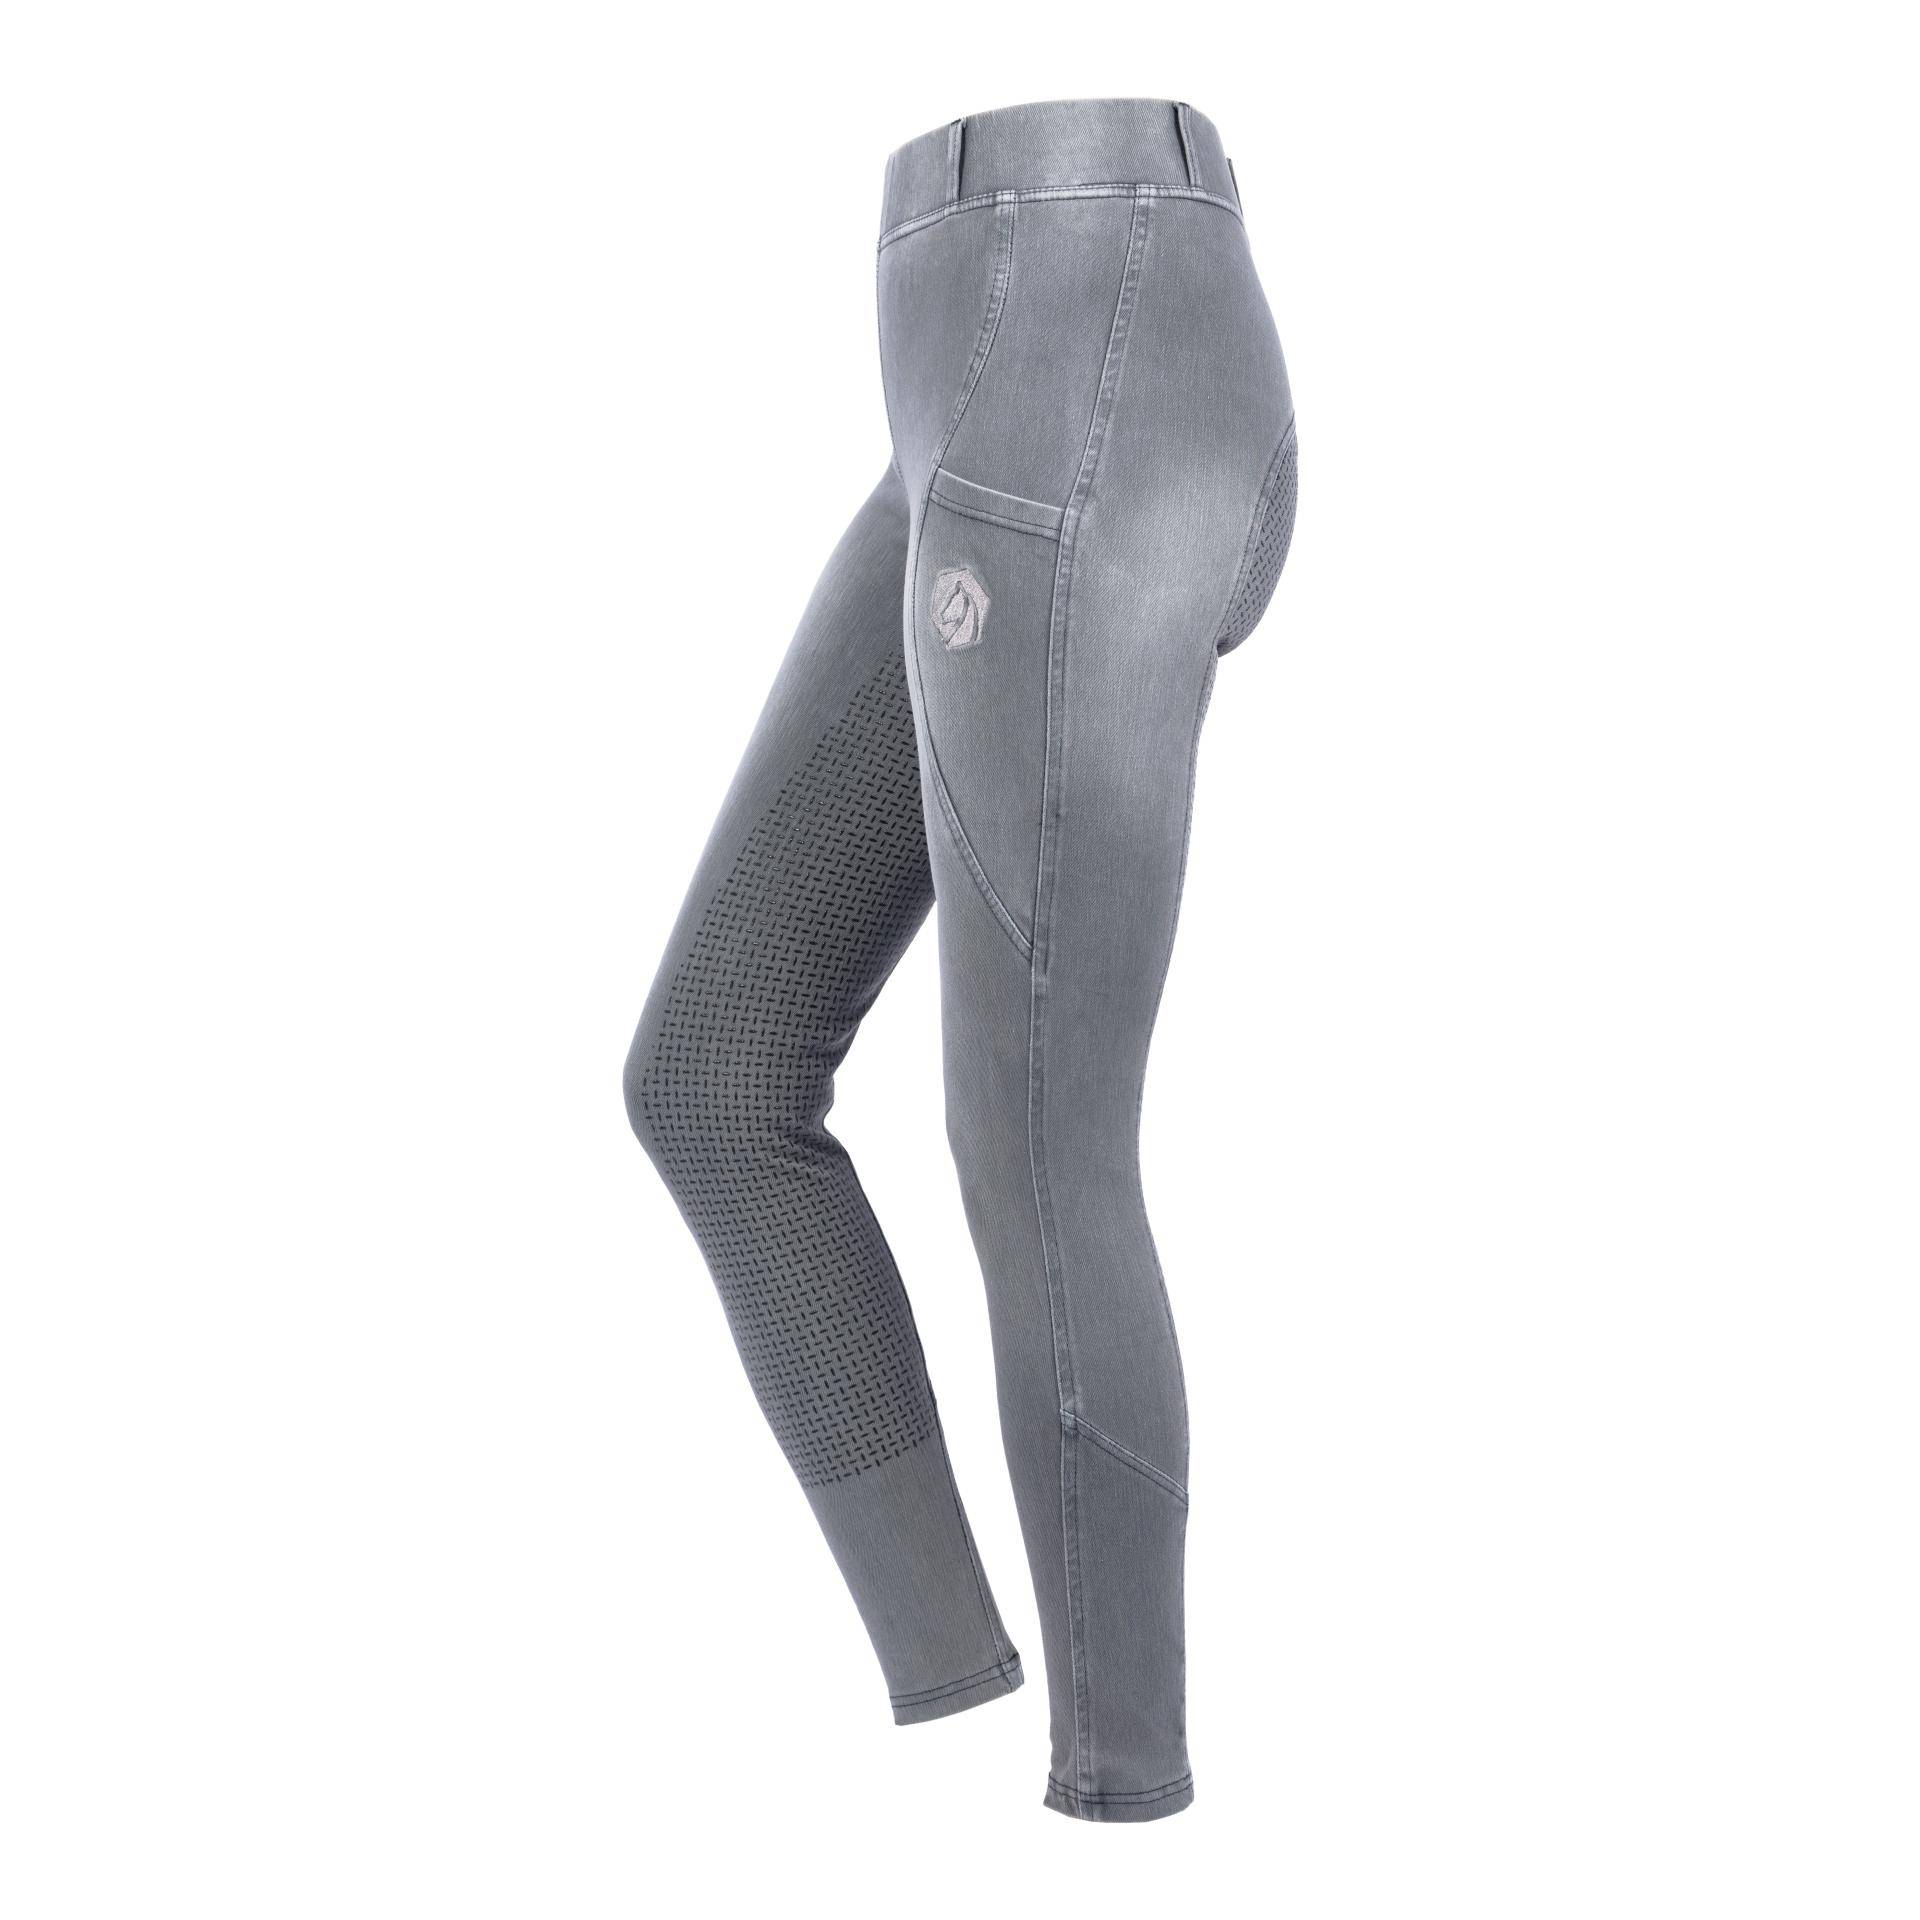 Marengo Reitleggings Jeans Fullgrip Damen Farbe: Ice Grey Denim, Grösse Bekleidung Damen: XXS von Marengo